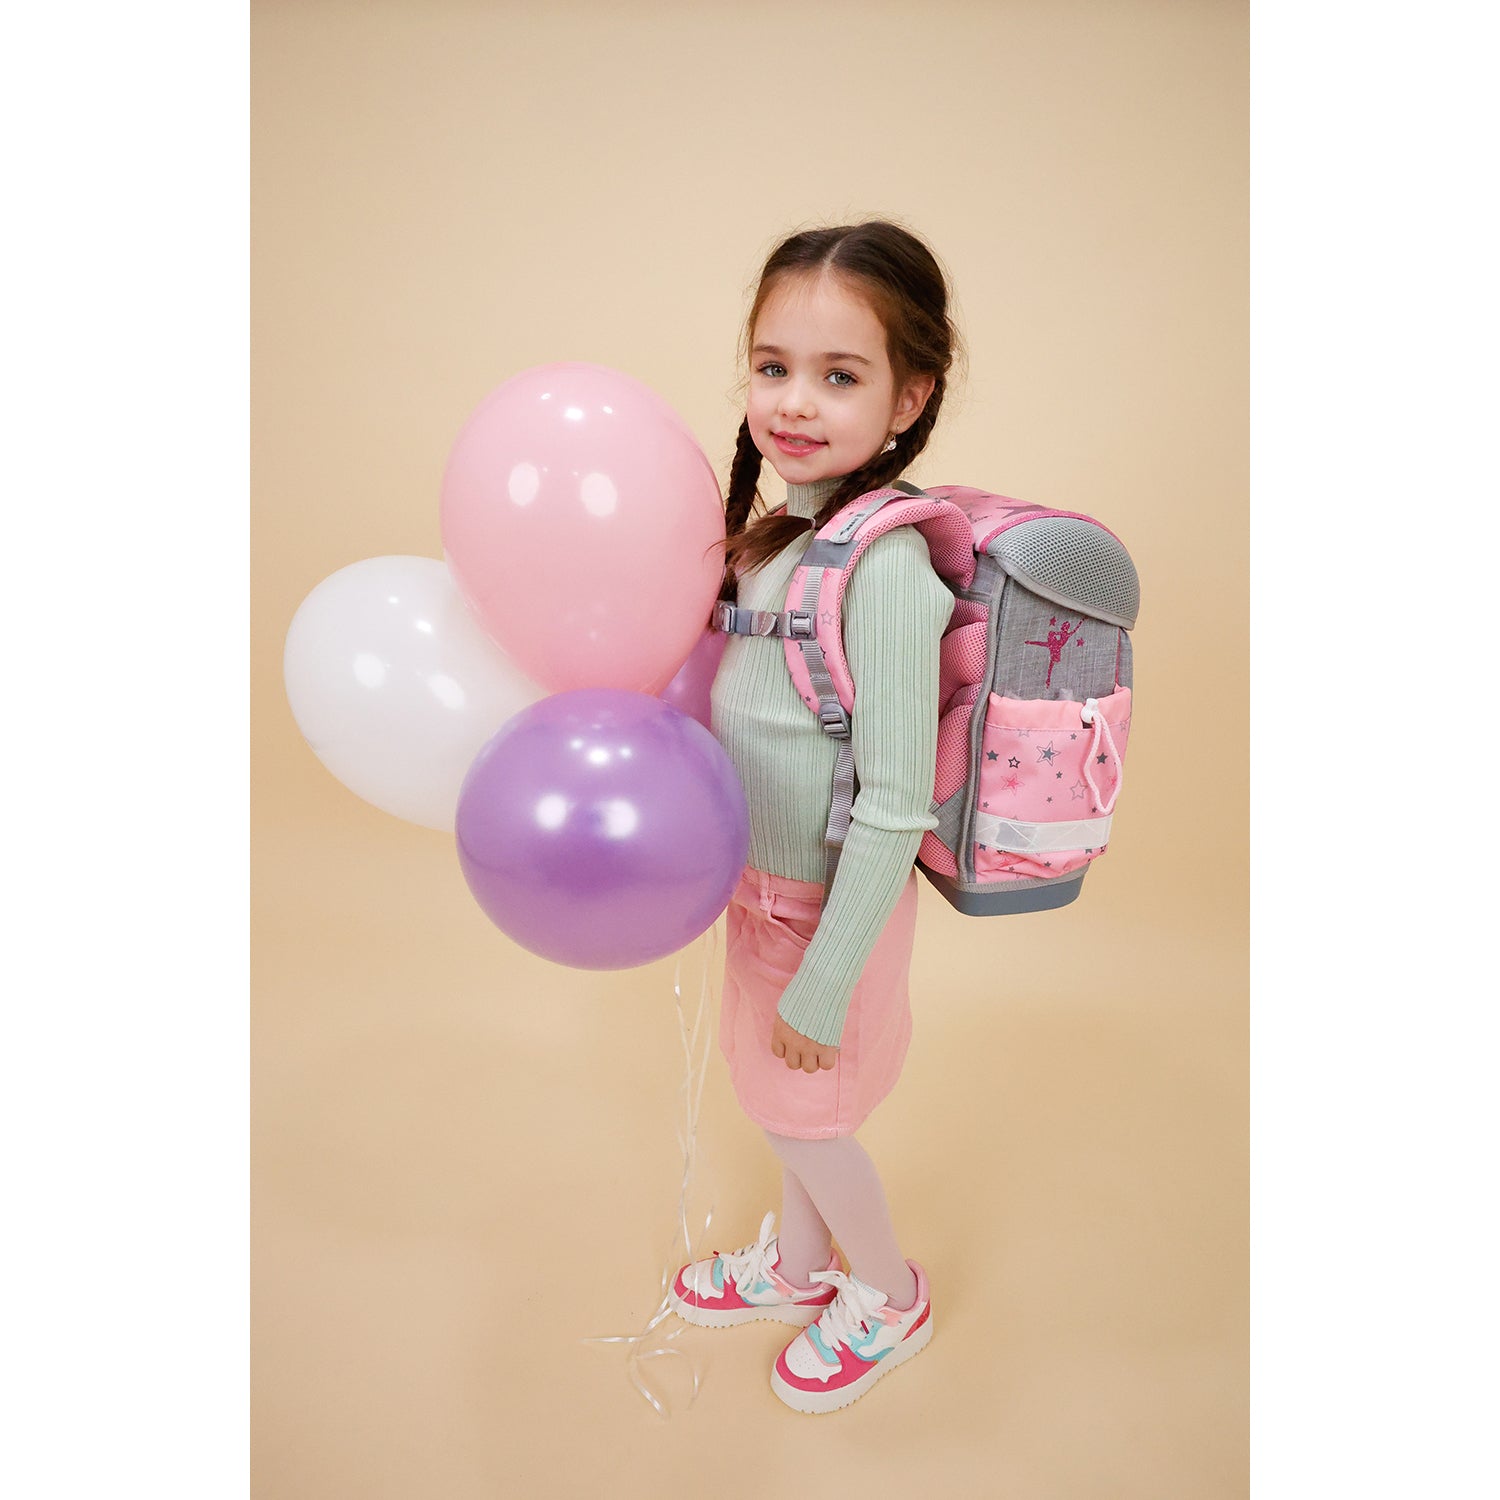 Classy Ballet Light Pink schoolbag set 4 pcs